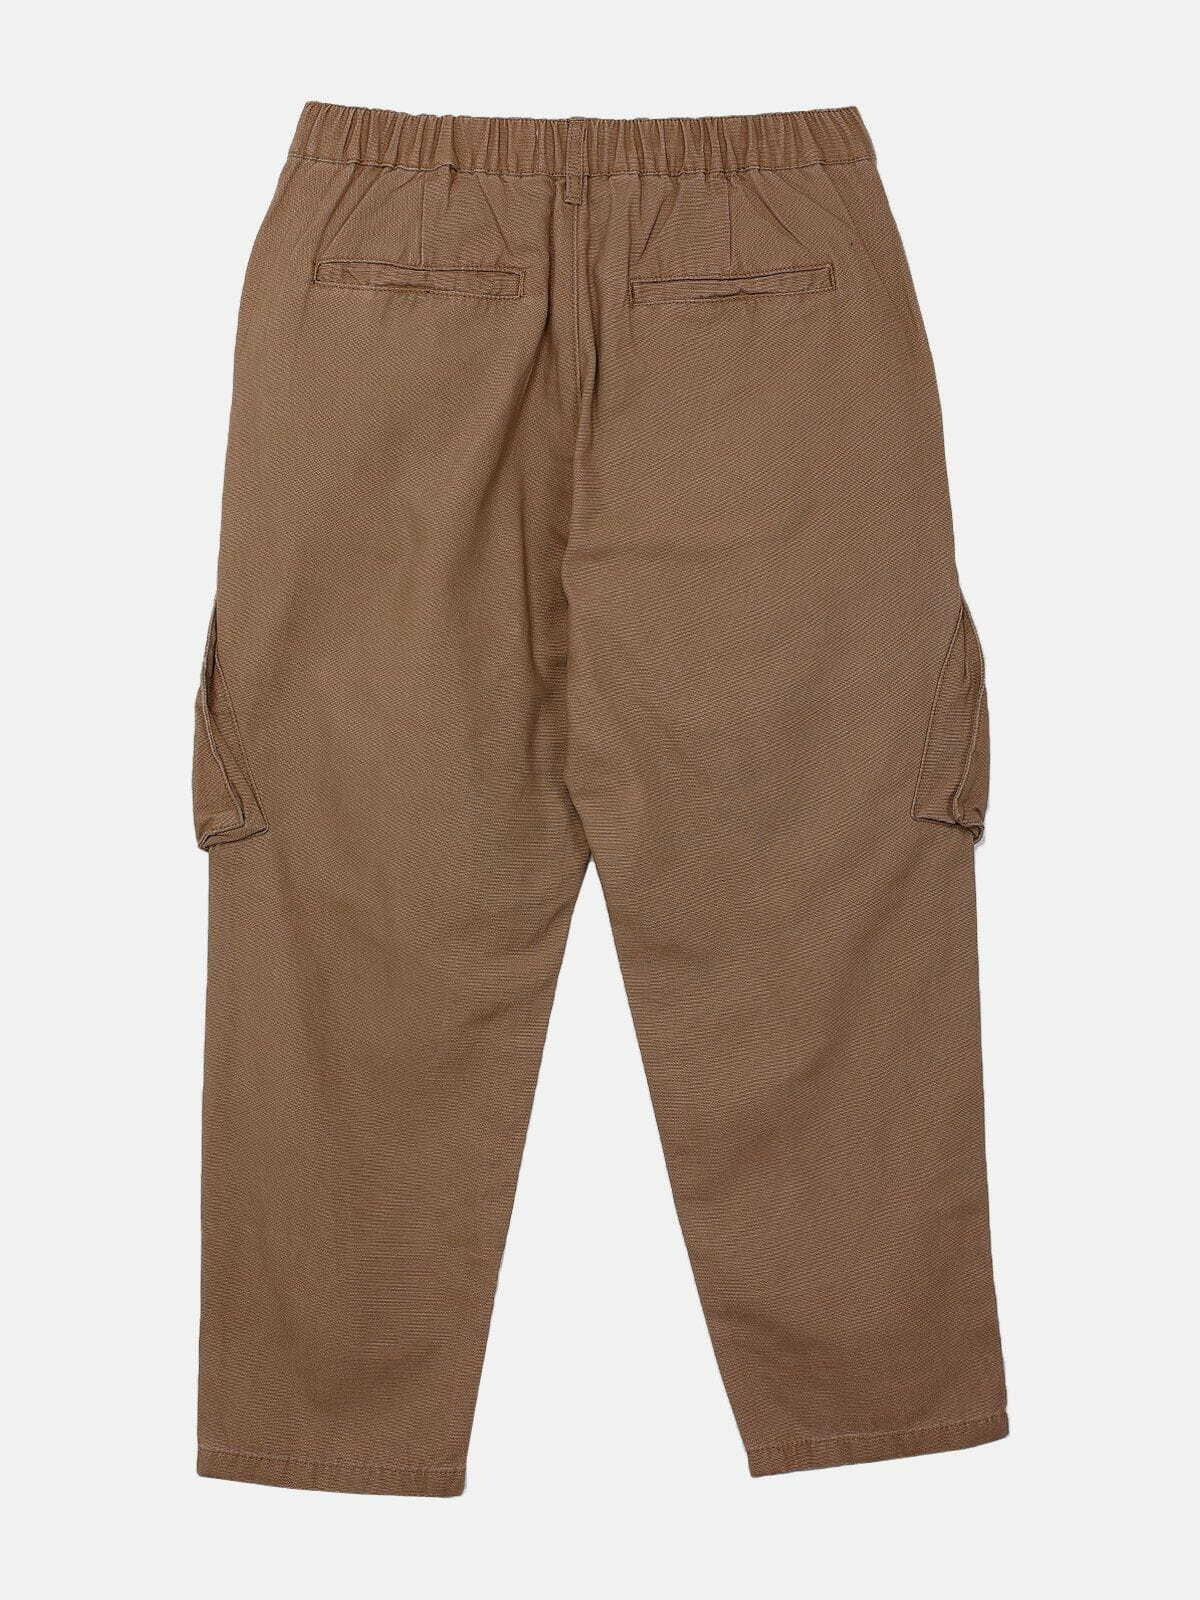 large cargo pocket pants edgy & functional streetwear 1556